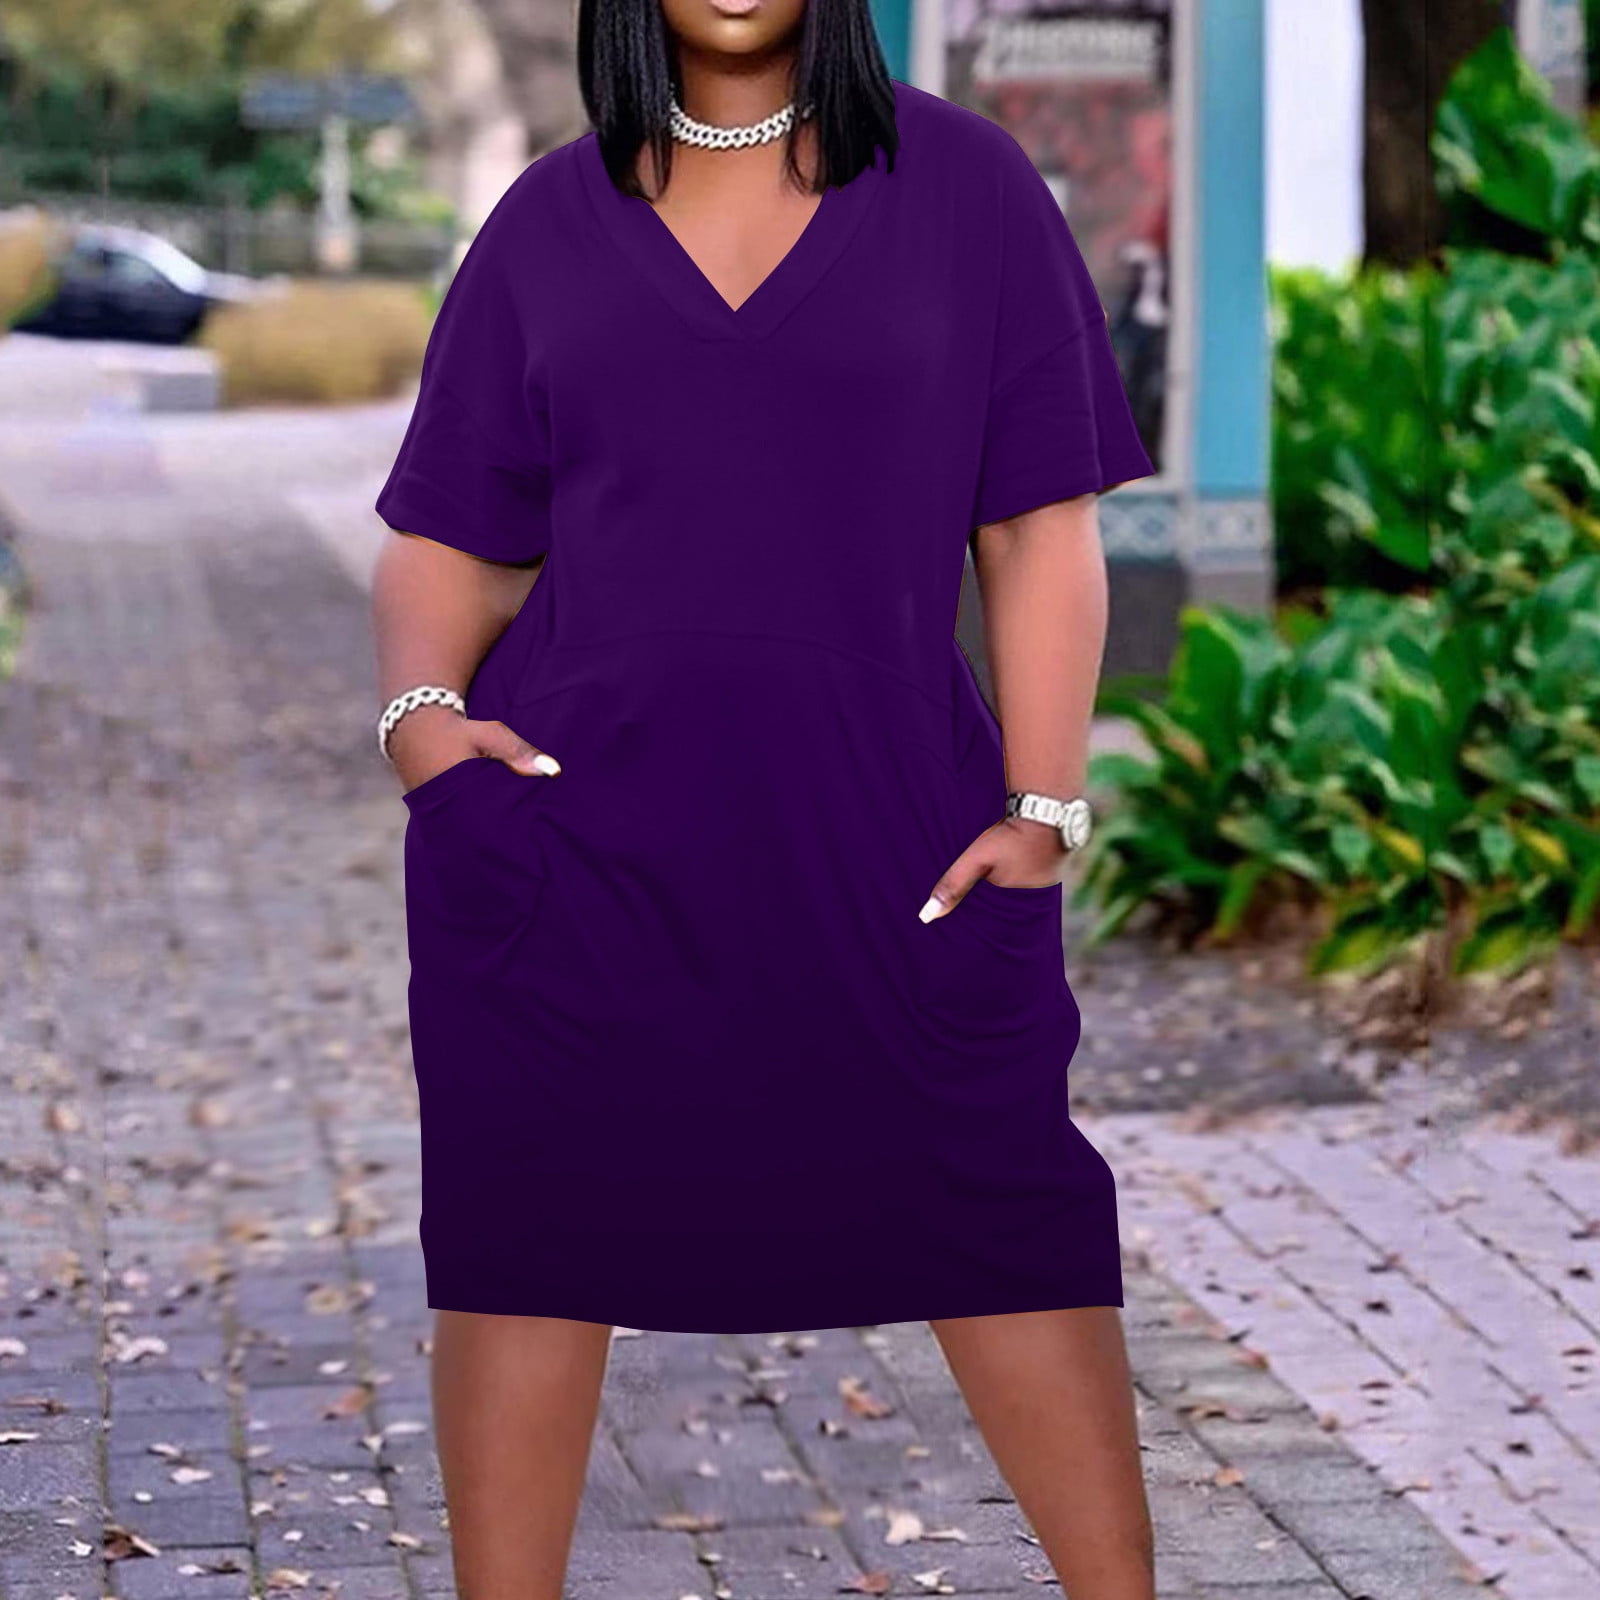 Buy Siya-Enterprises Women's Cotton Maxi Multi Dress Full Length  Comfortable Stylish and Dailywear Dress with Round Neck and Sleeveless Dress  Beautiful Looks Perfect for Regular wear. (XXL, Green) at Amazon.in